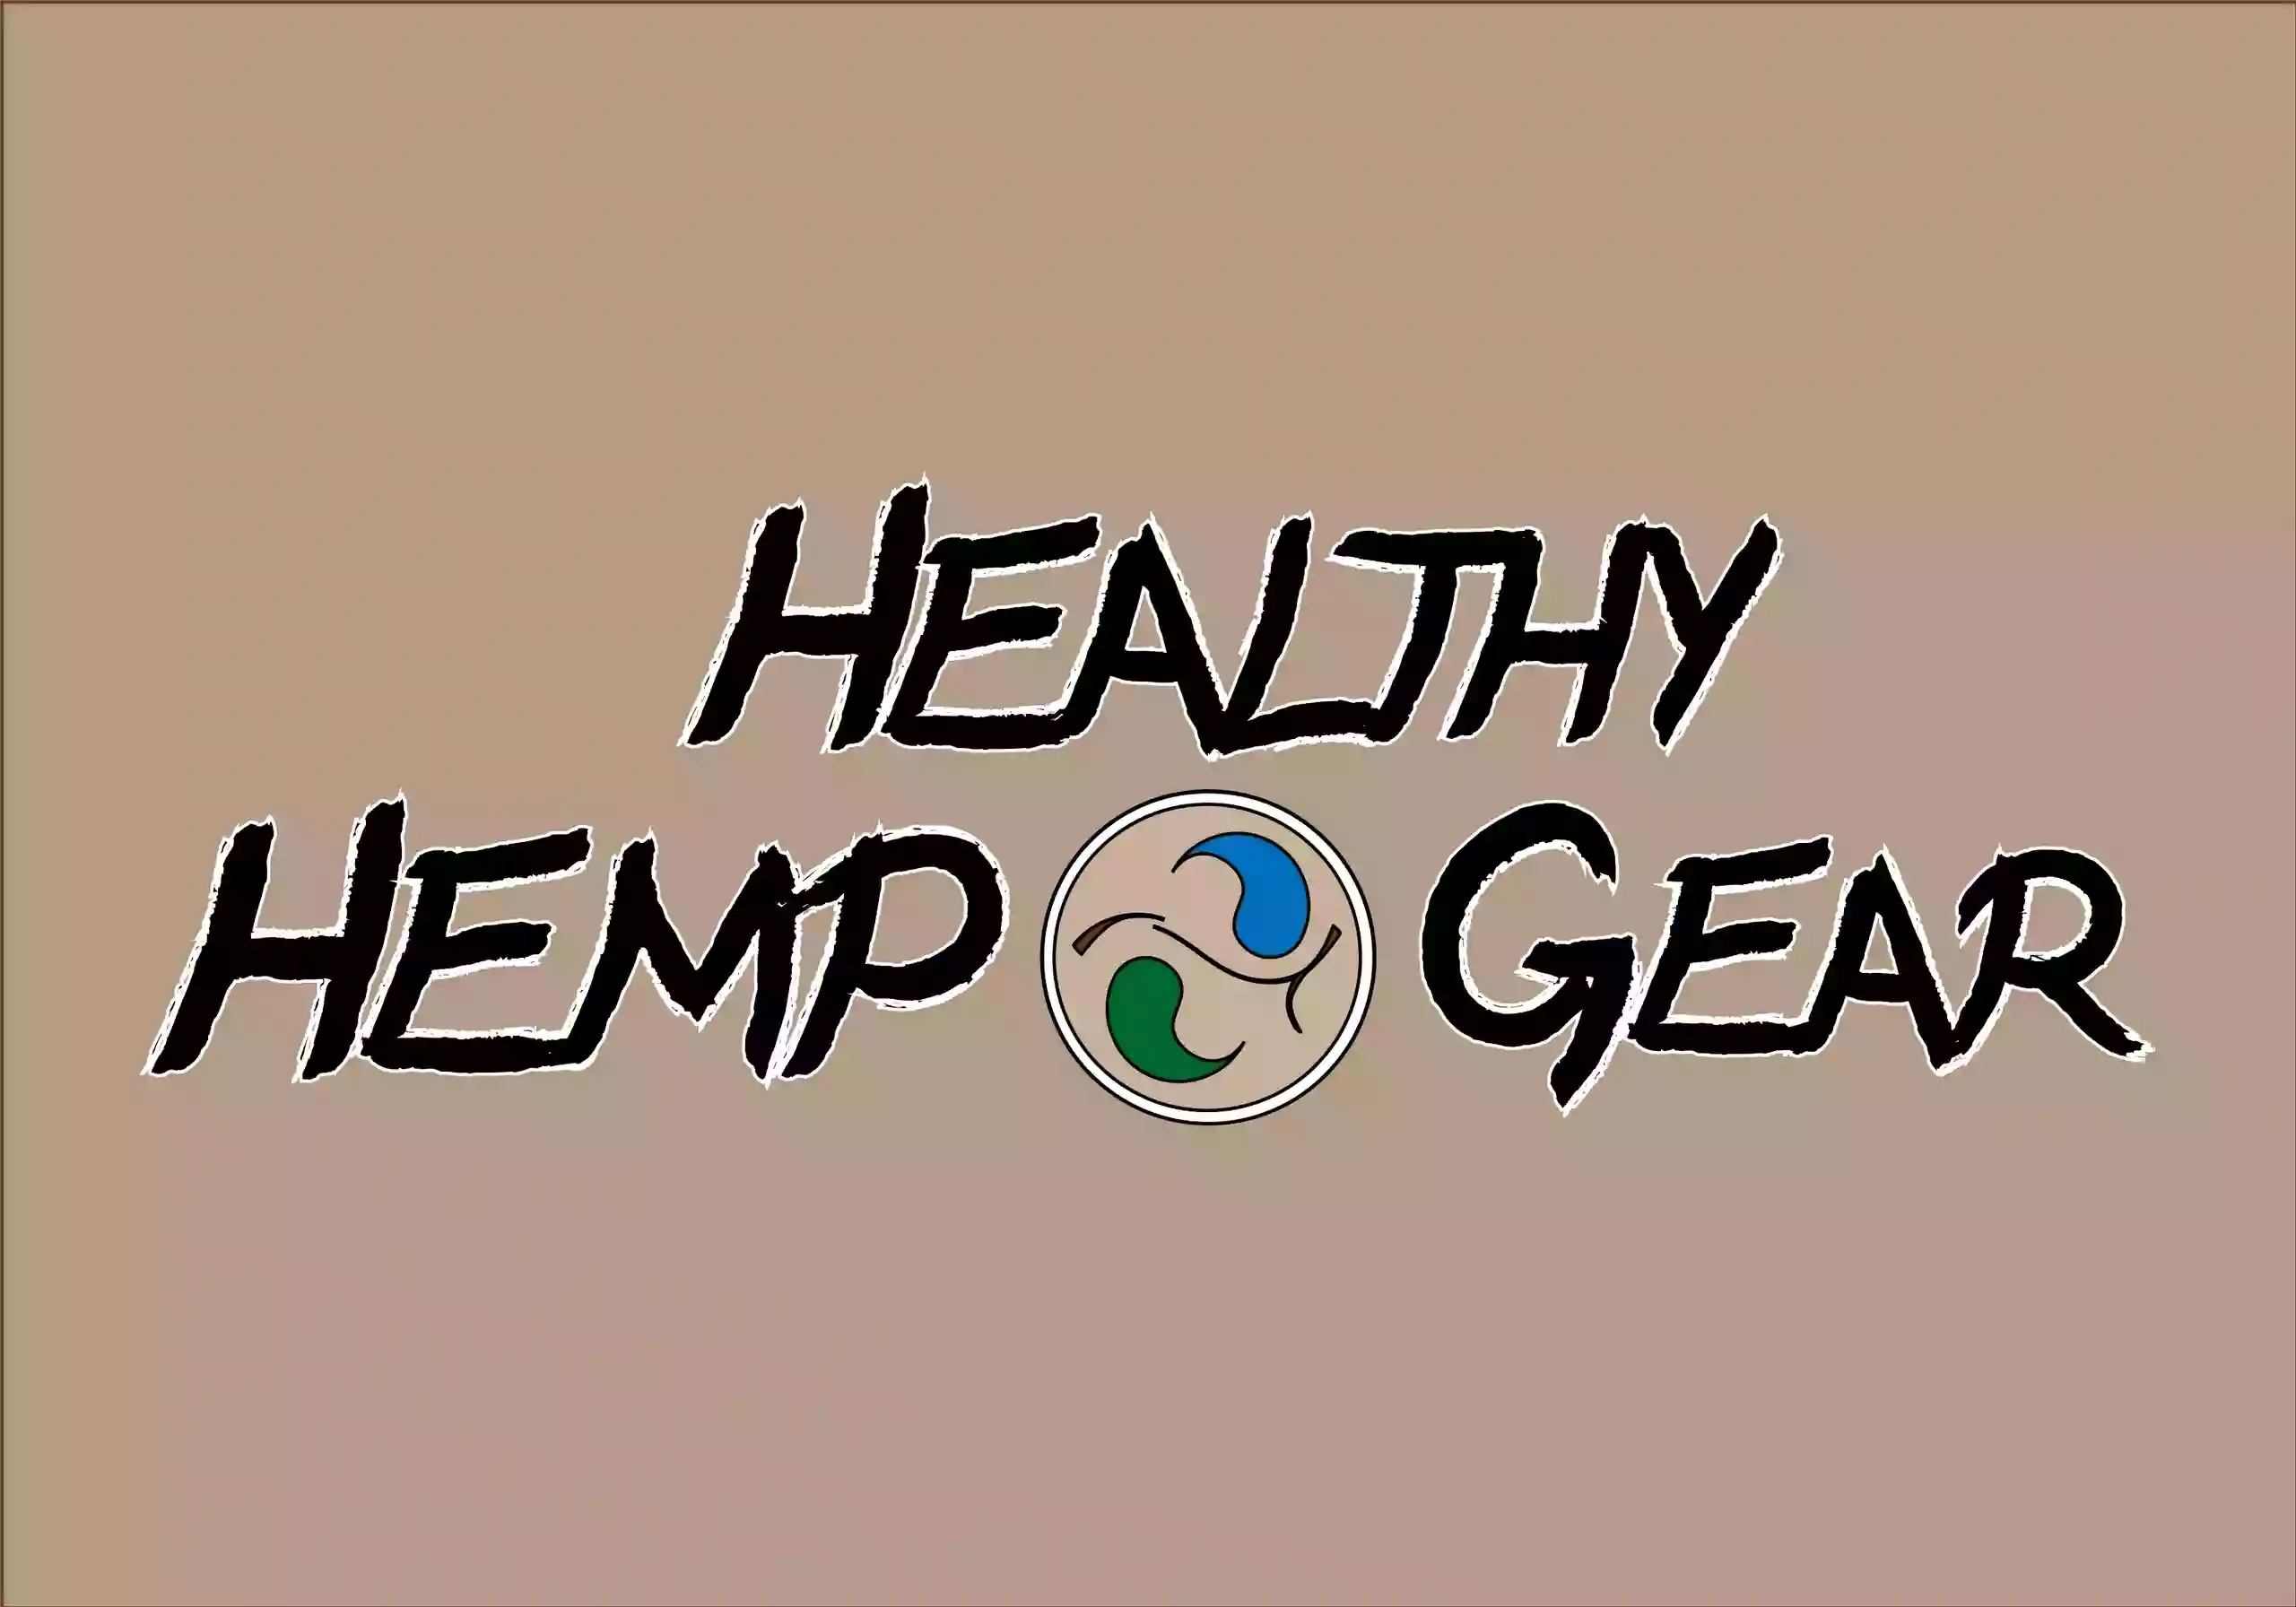 Healthy Hemp Gear